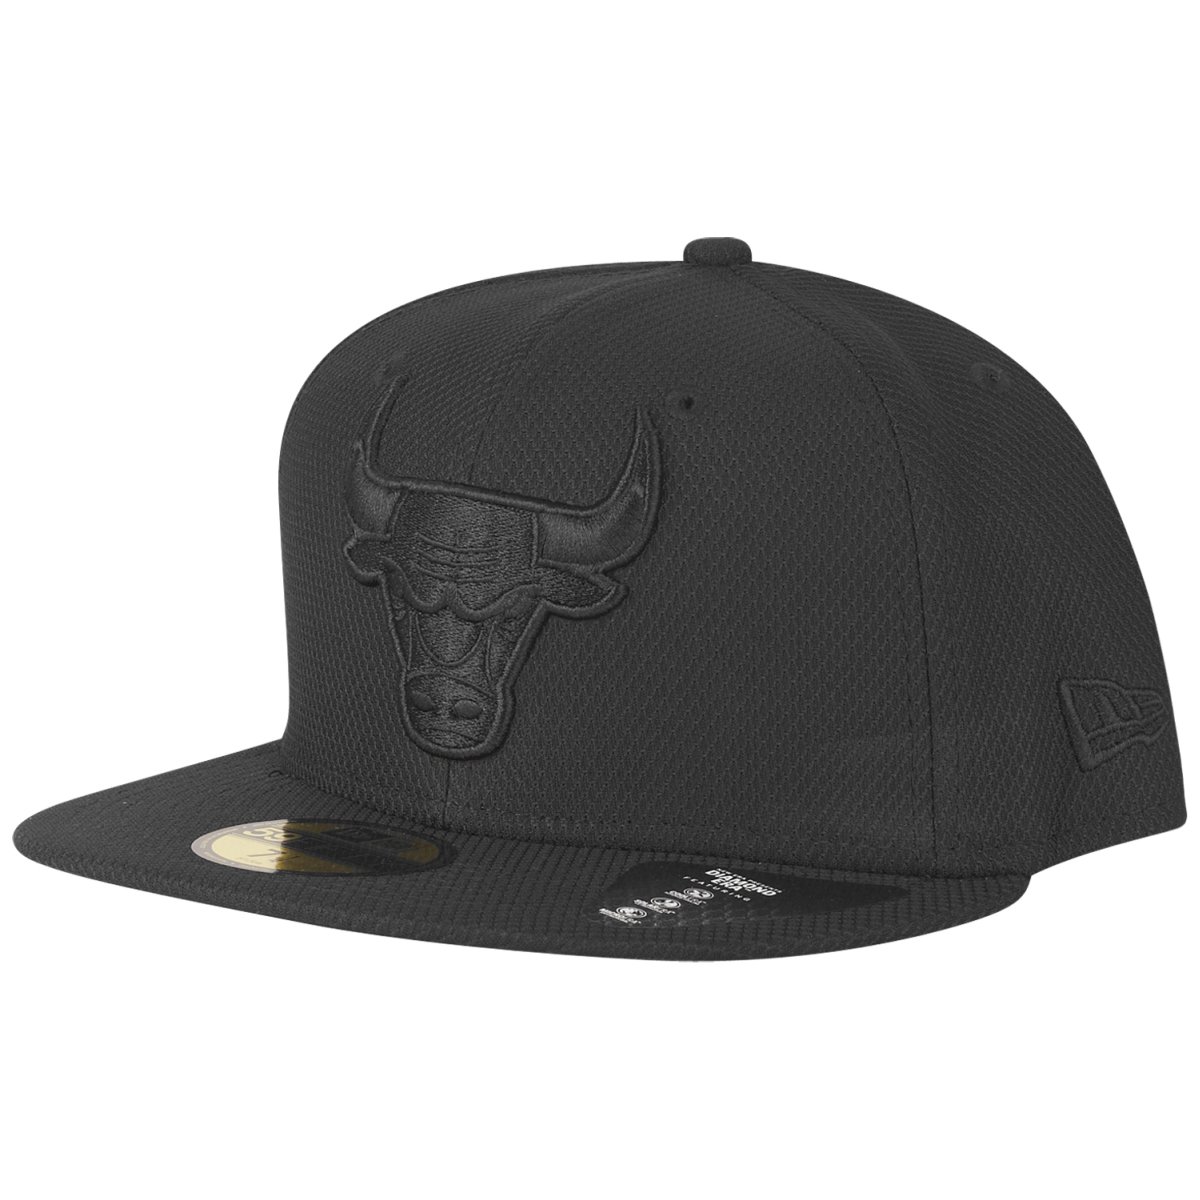 New Era Chicago Bulls Prene Diamond 59Fifty Cap